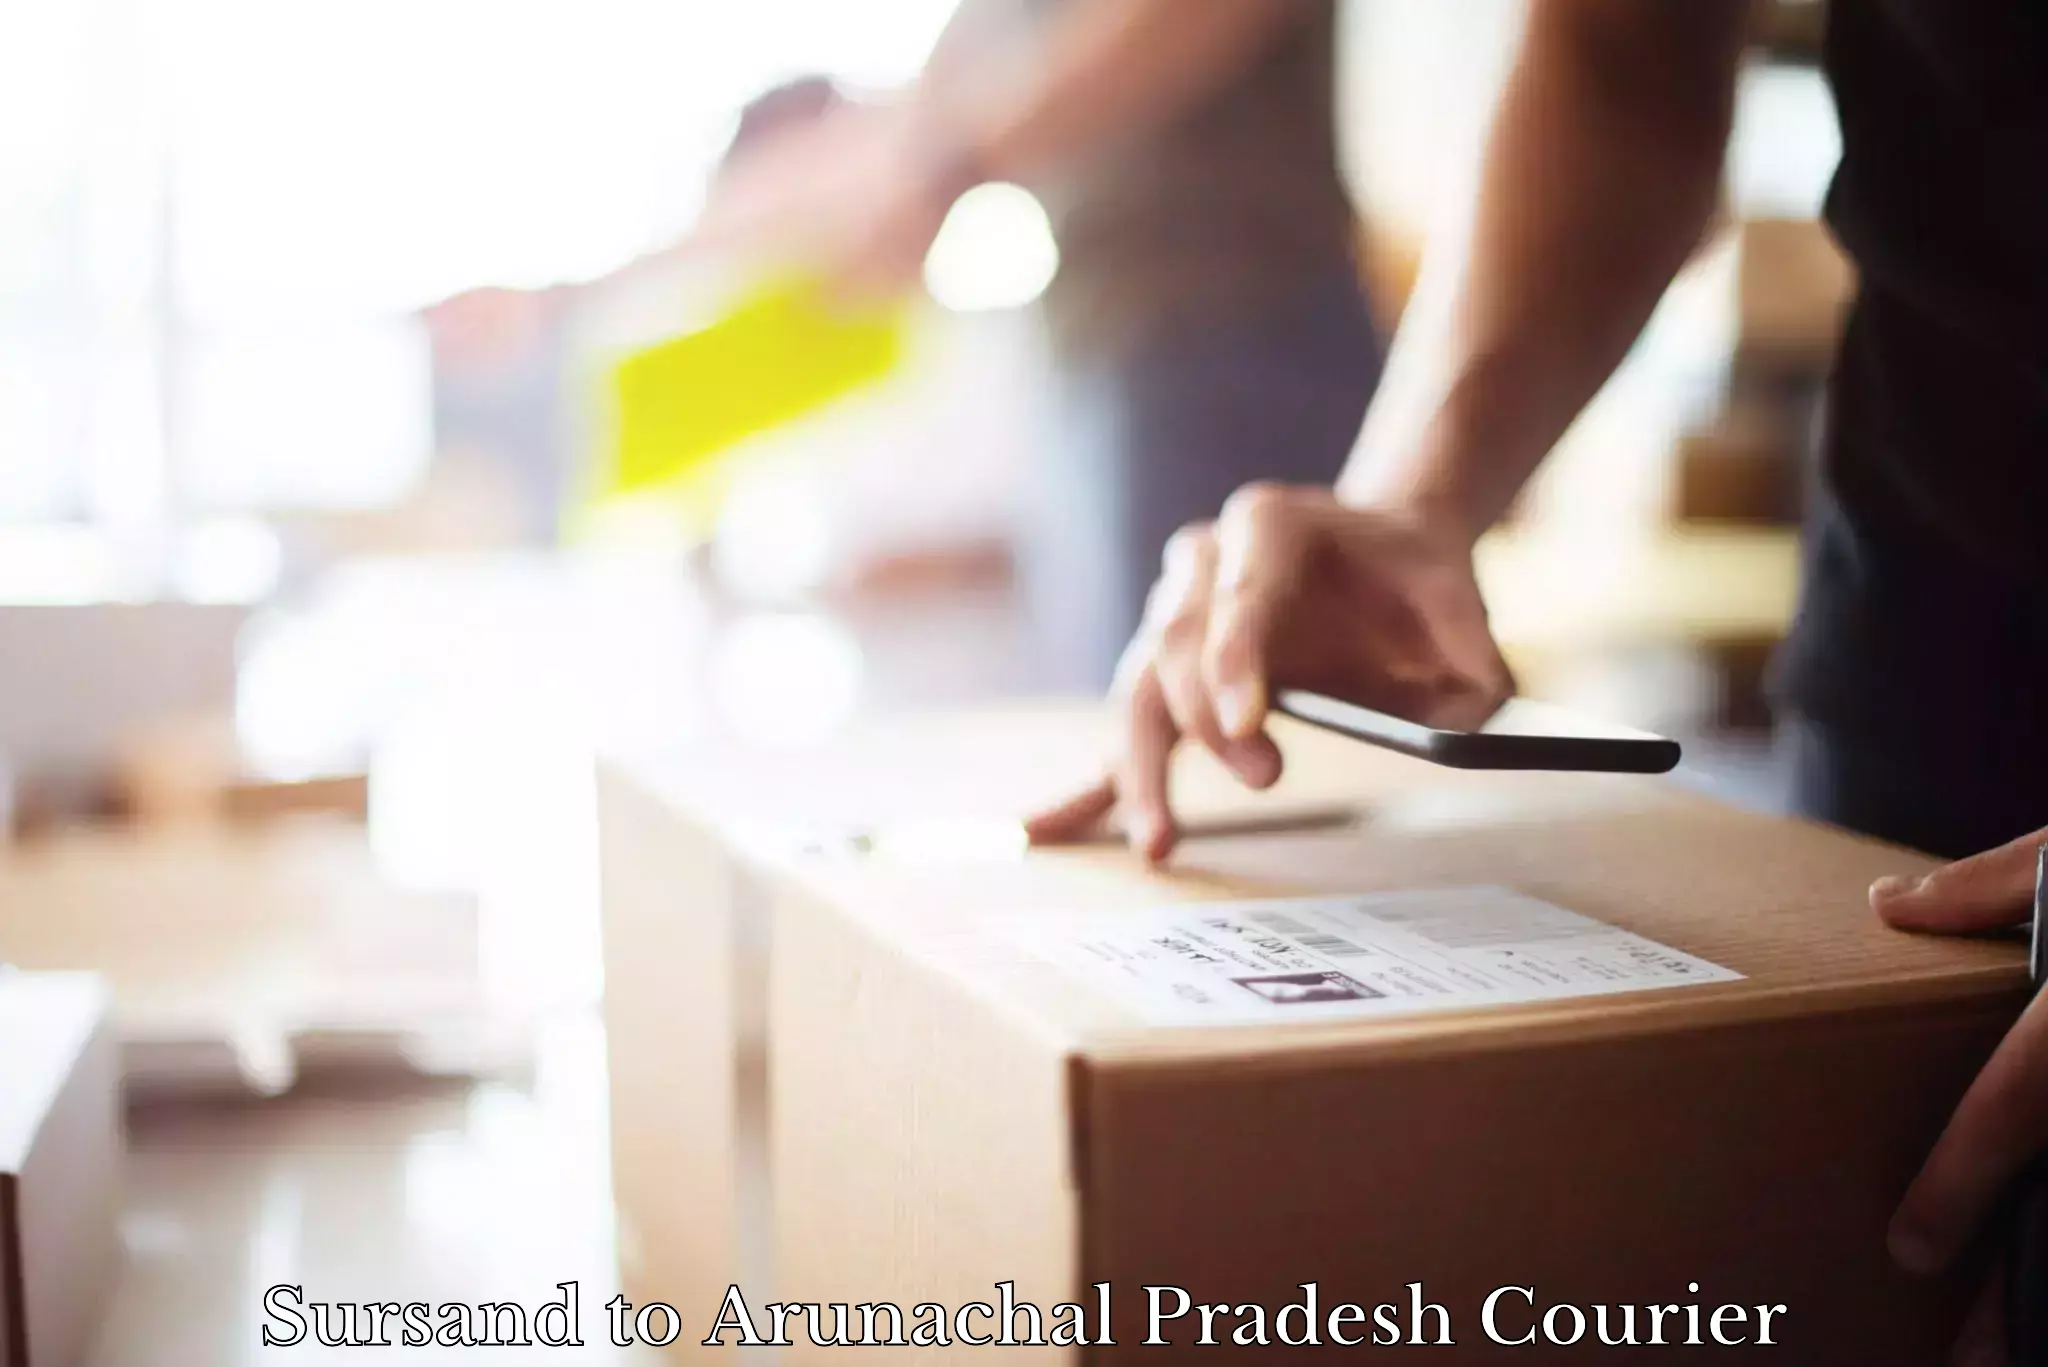 High-capacity parcel service Sursand to Arunachal Pradesh